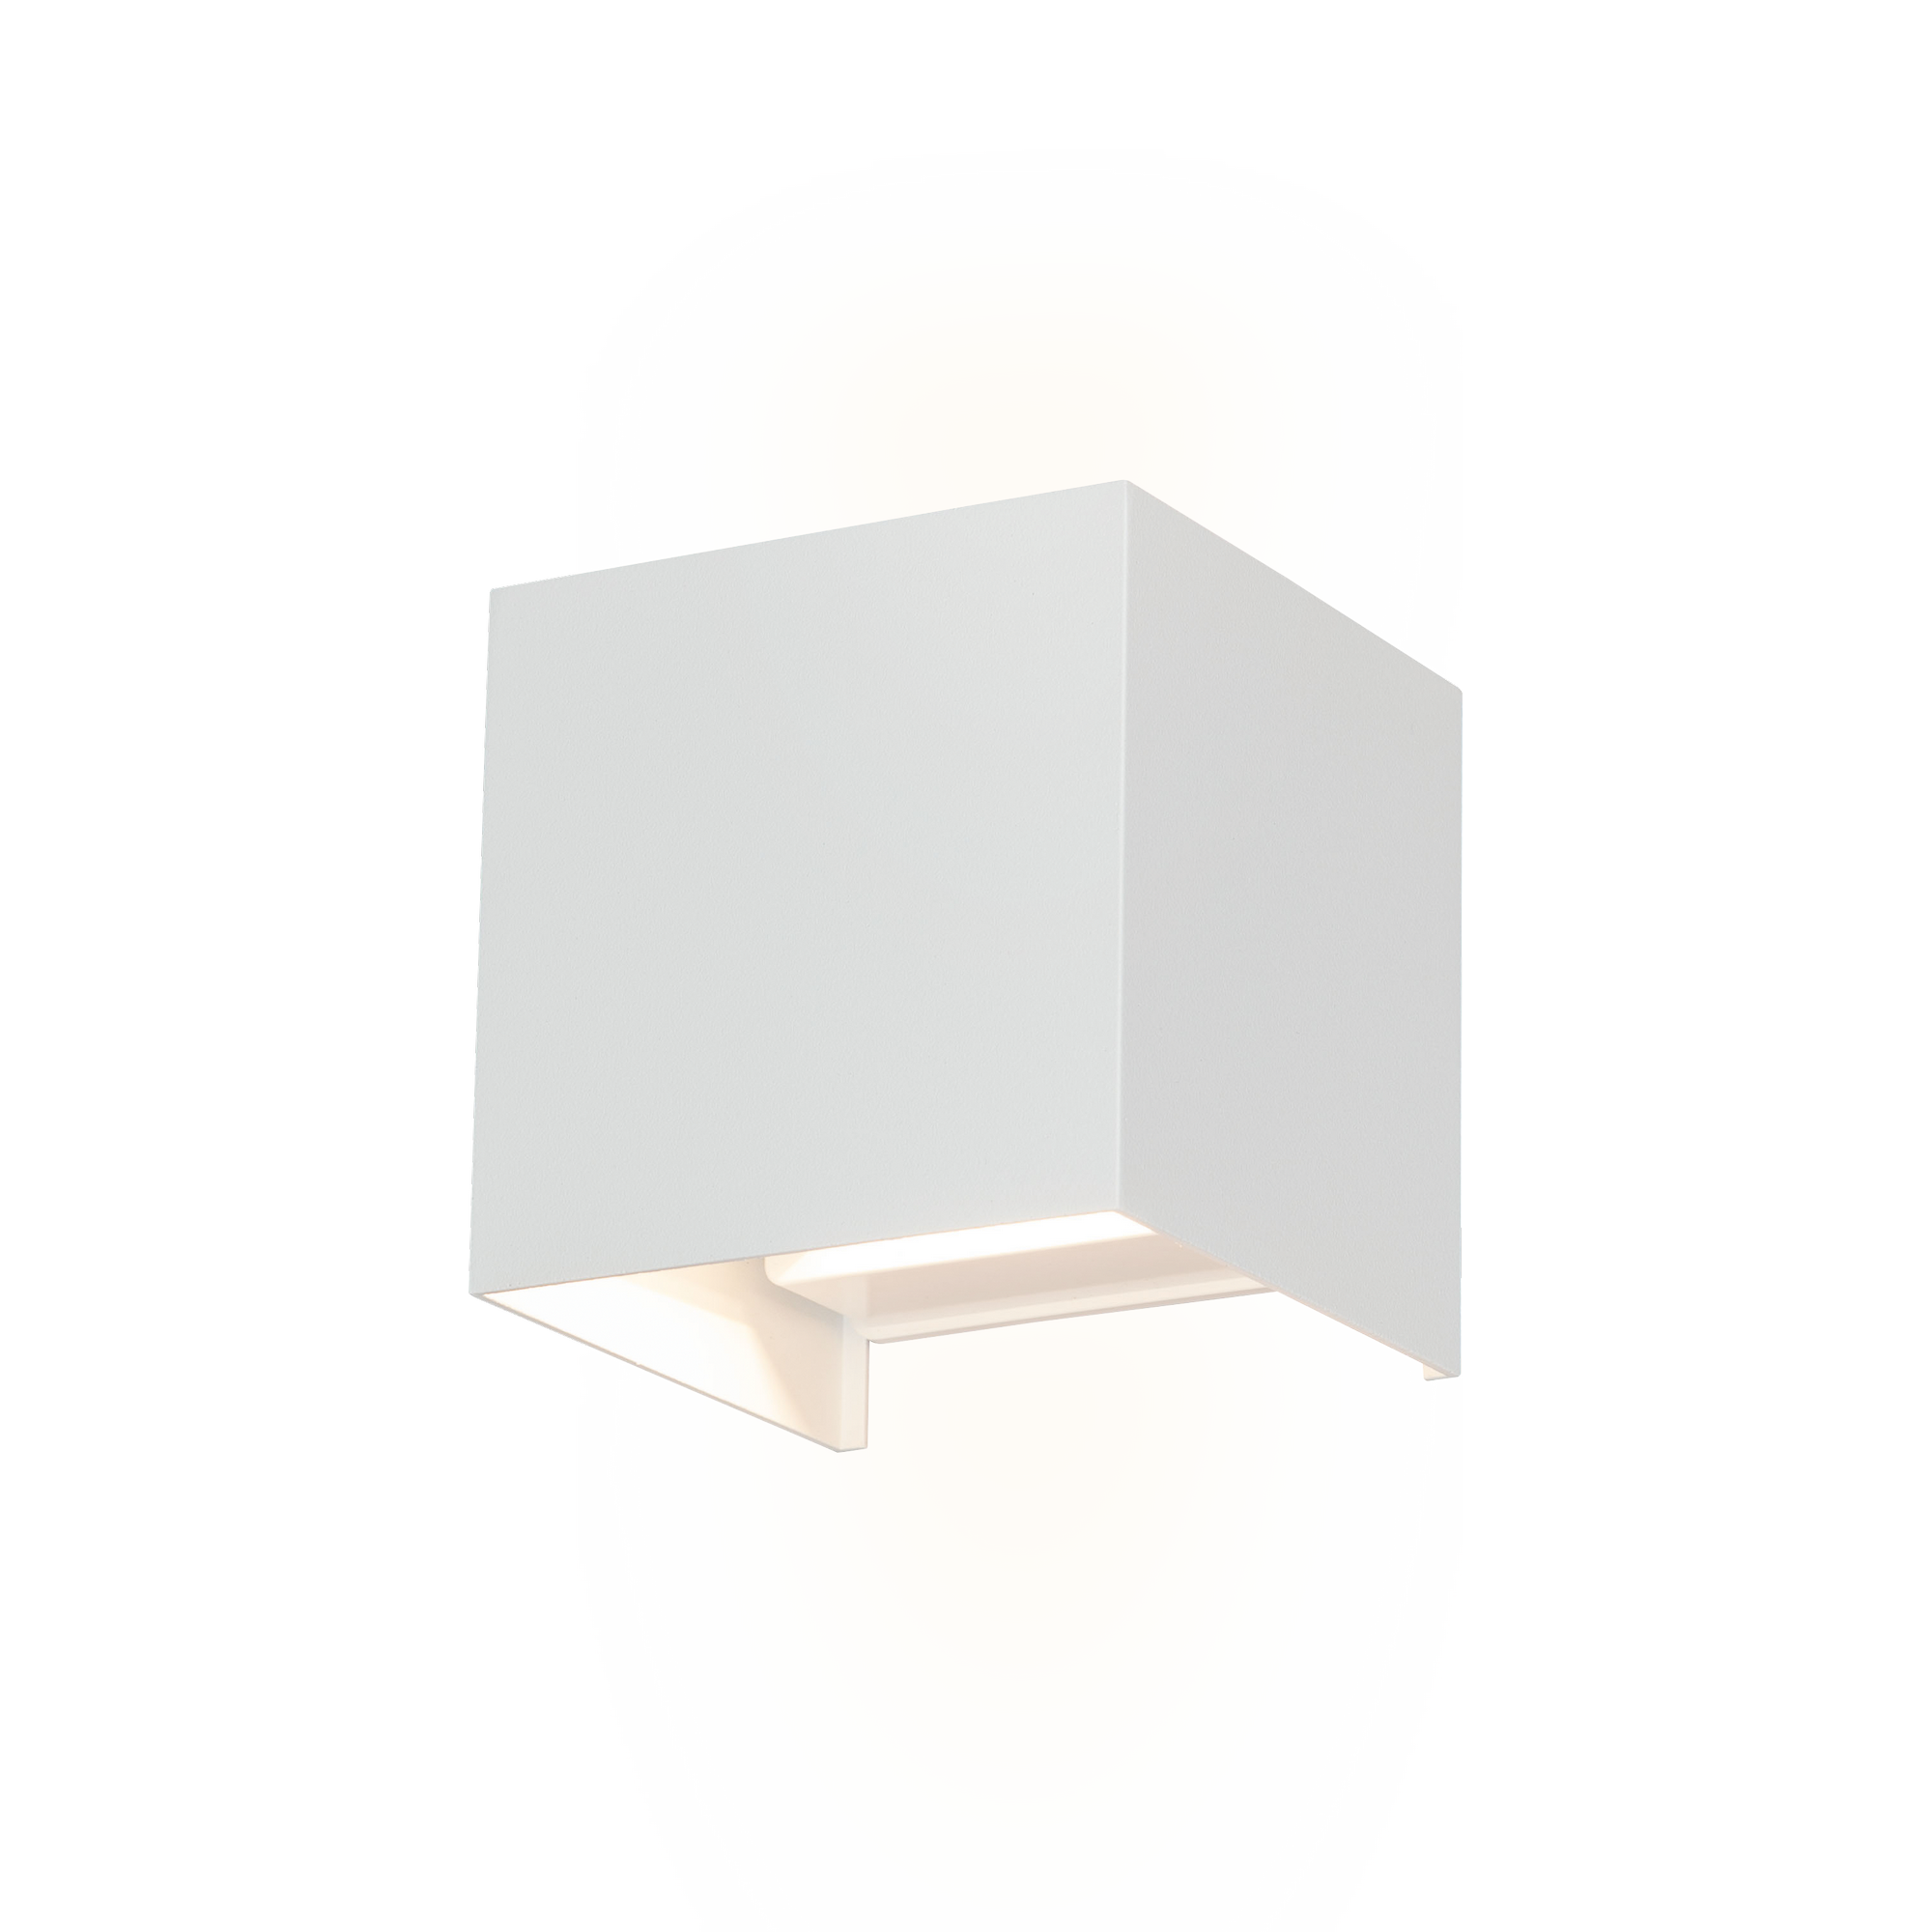 LED-Außenwandleuchte 'Pula' weiß 10 x 10 x 10 cm + product picture